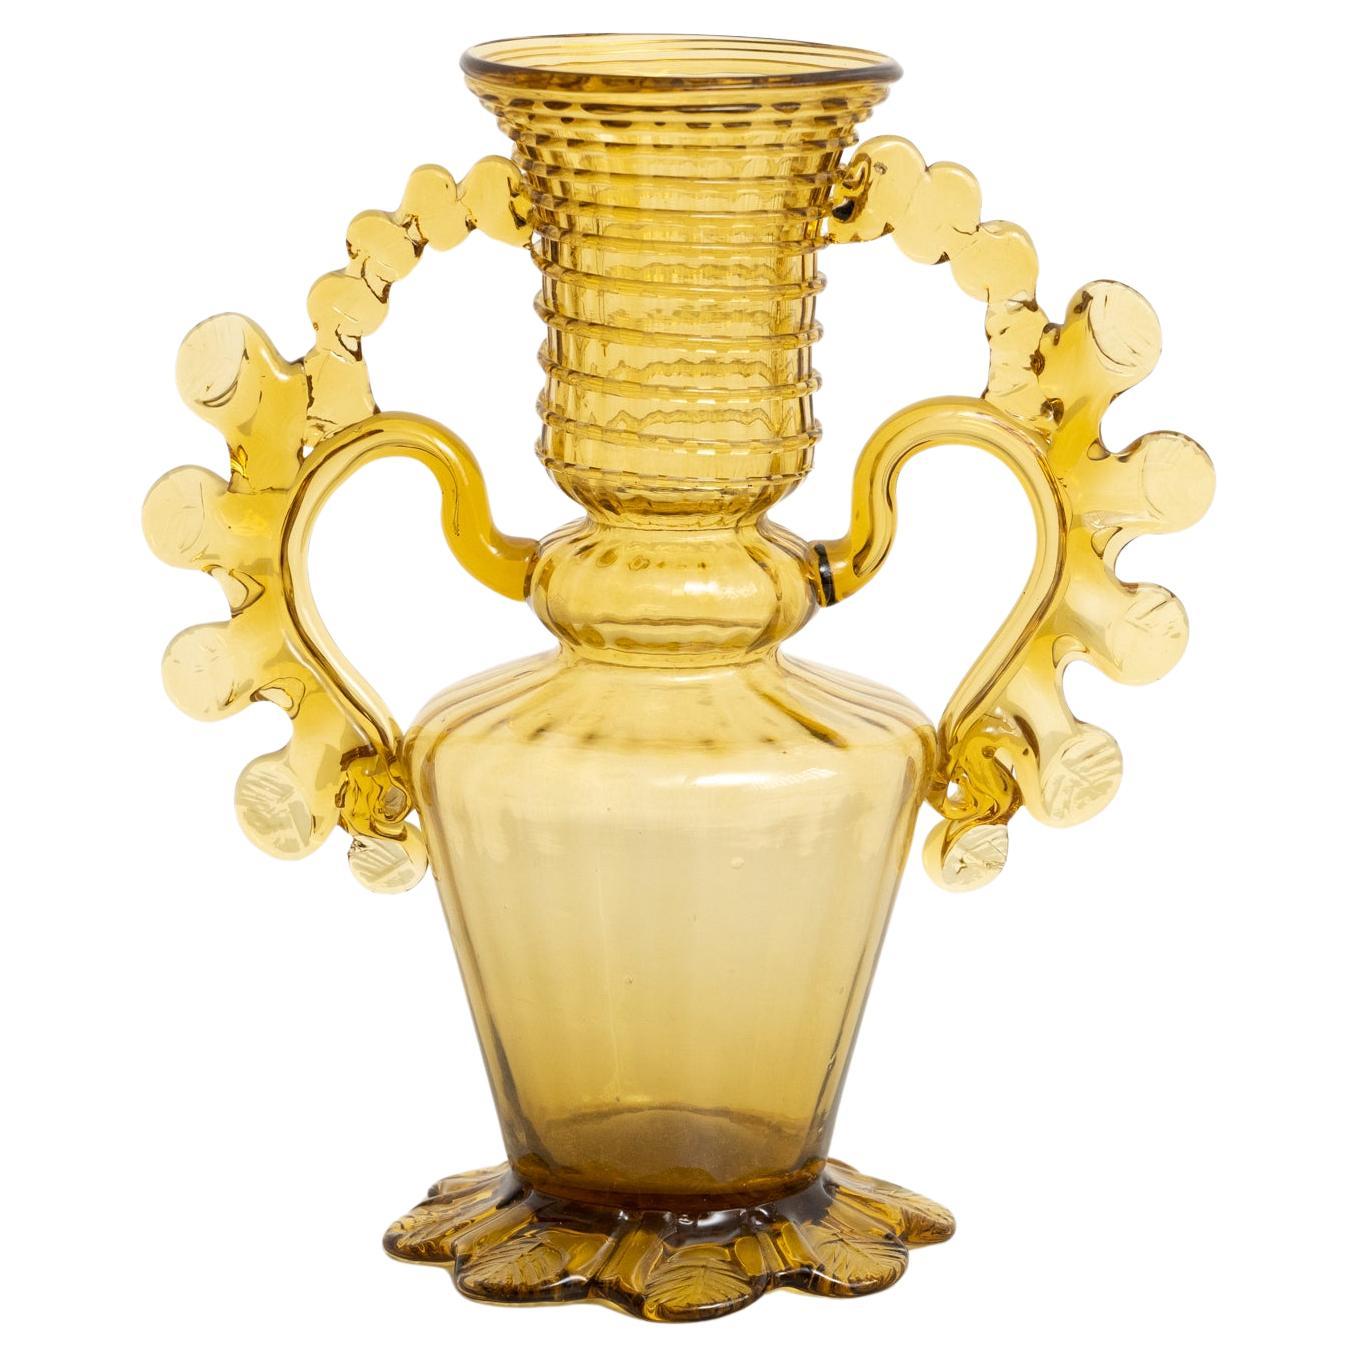 Elegant Amber Blown Glass Vase - Early 20th Century Spanish Artistry For Sale